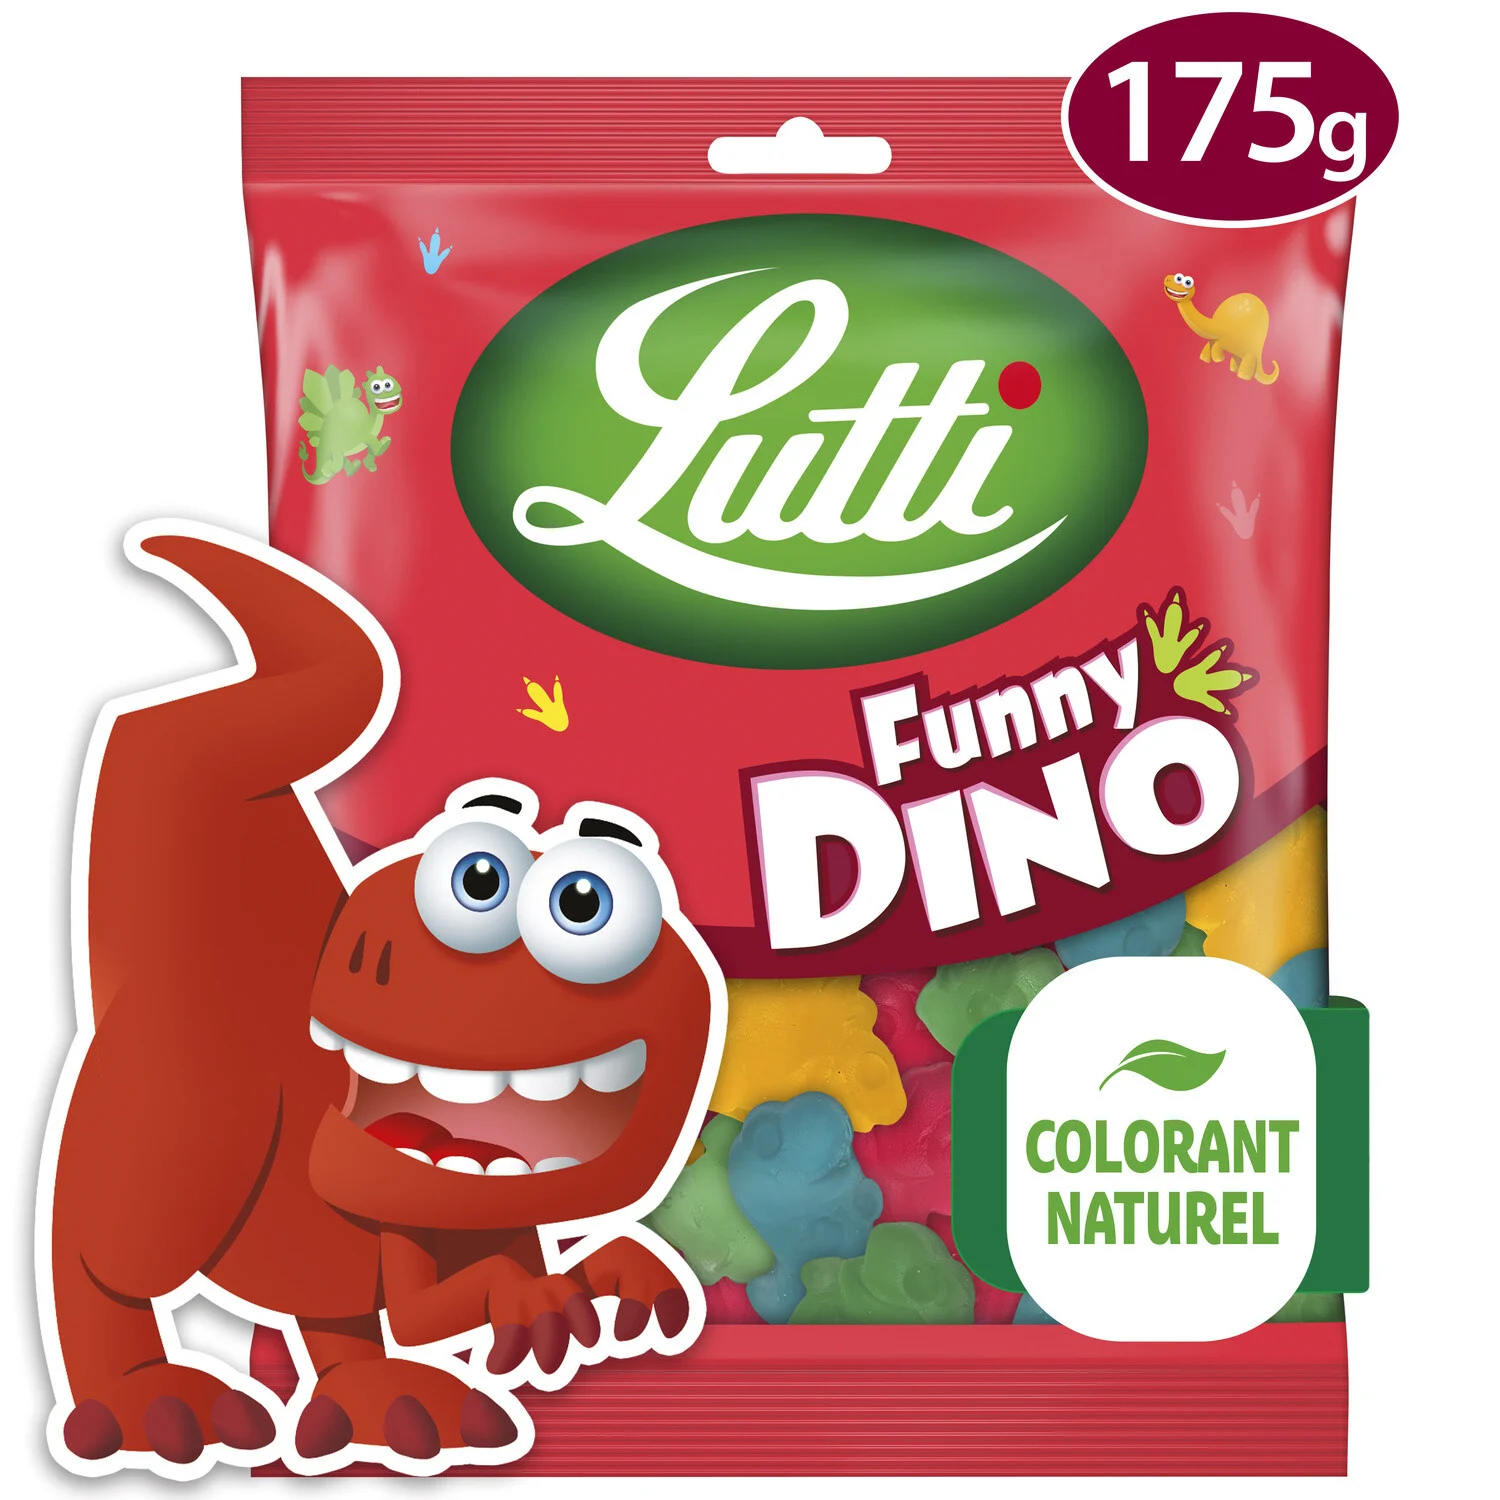 175g Lutti Funny Dino